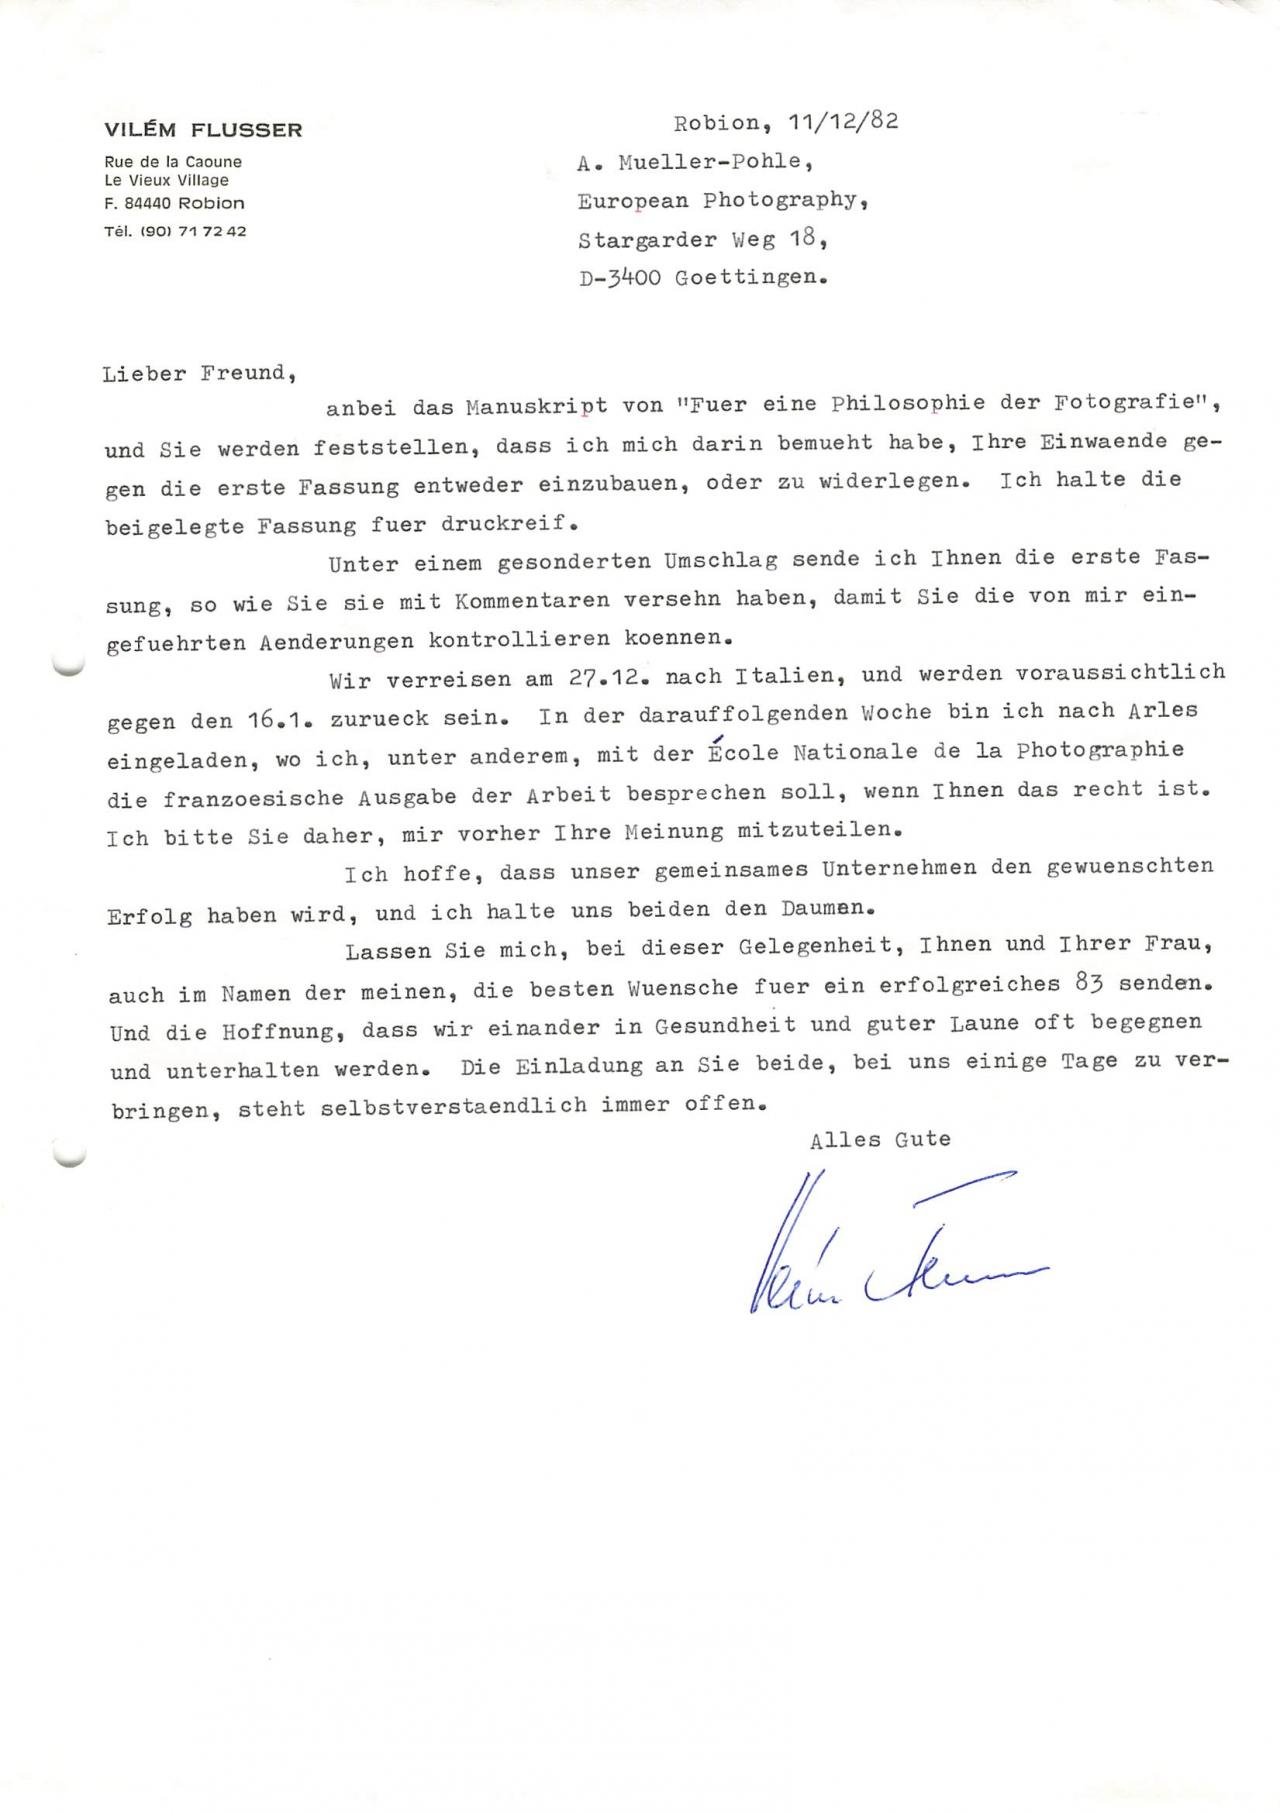 Brief von Vilém Flusser an Andreas Müller-Pohle, 11.12.1982